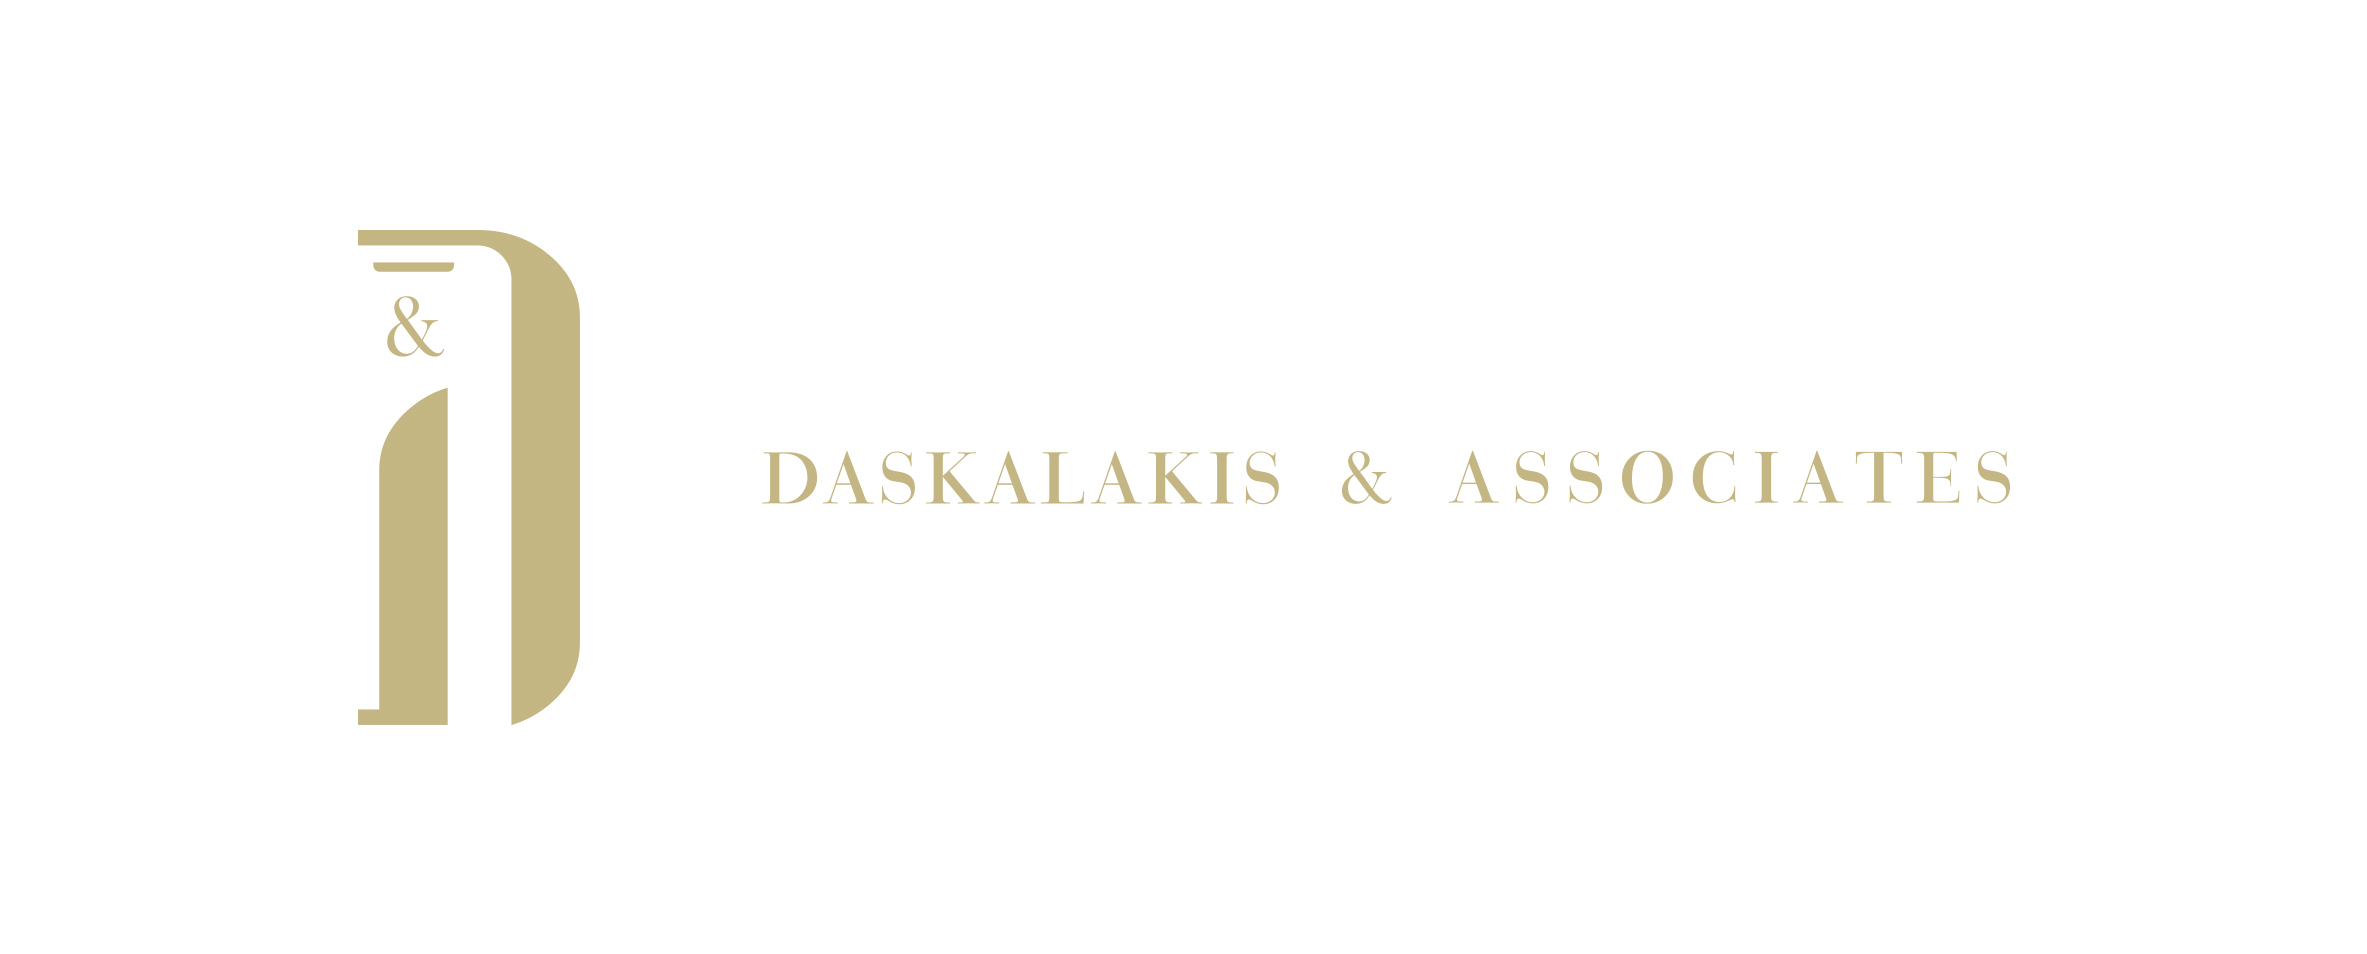 daskalakis 3 1 - Daskalakis & Associates - The Design Boutique -daskalakis 3 1